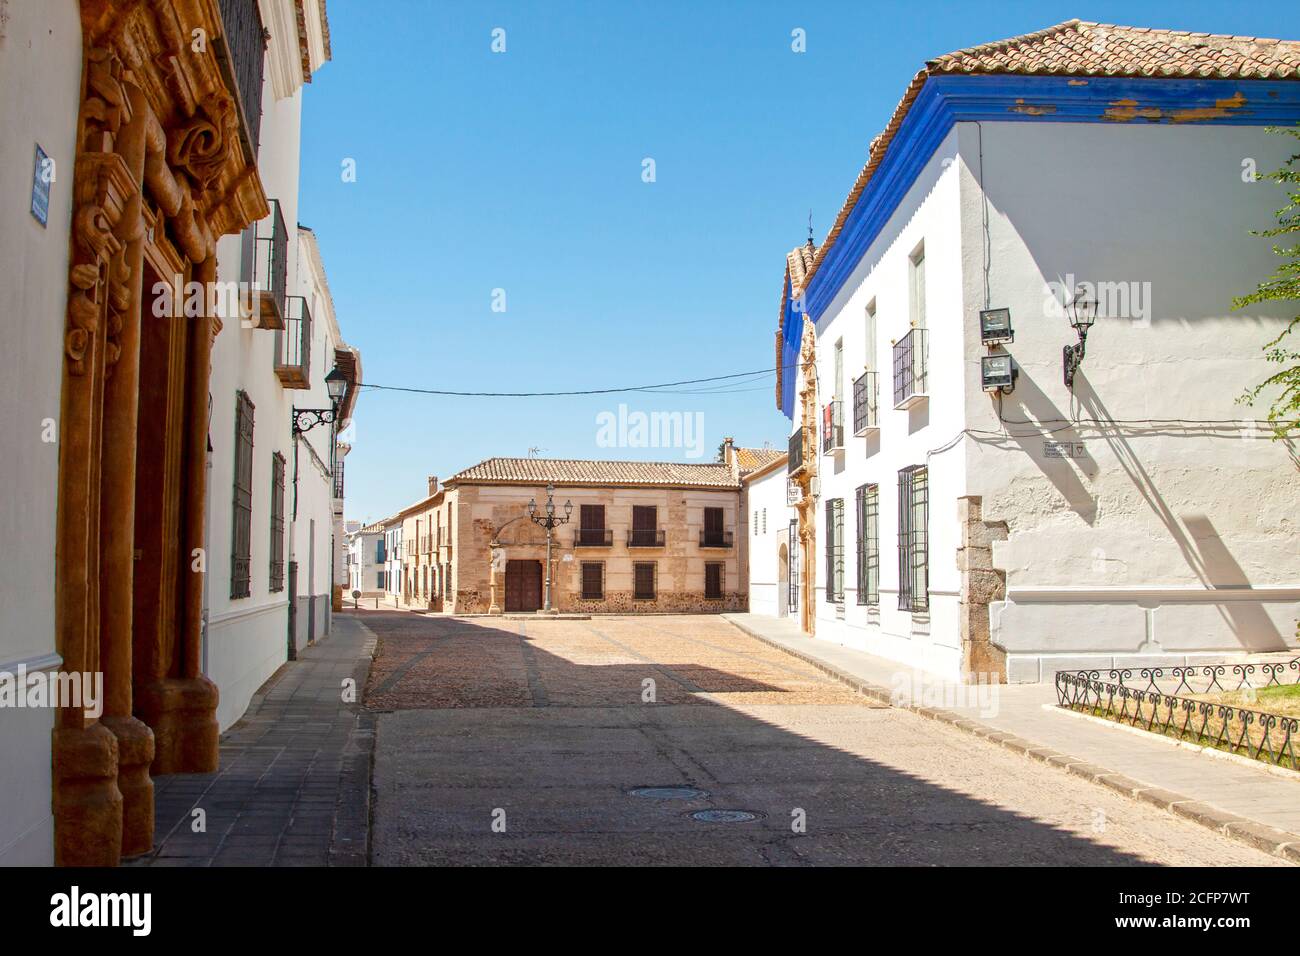 Santo Domingo square (Plaza de Santo Domingo) with old and historic palaces in the village of Almagro, Spain. Province of Ciudad Real, Castilla La Man Stock Photo